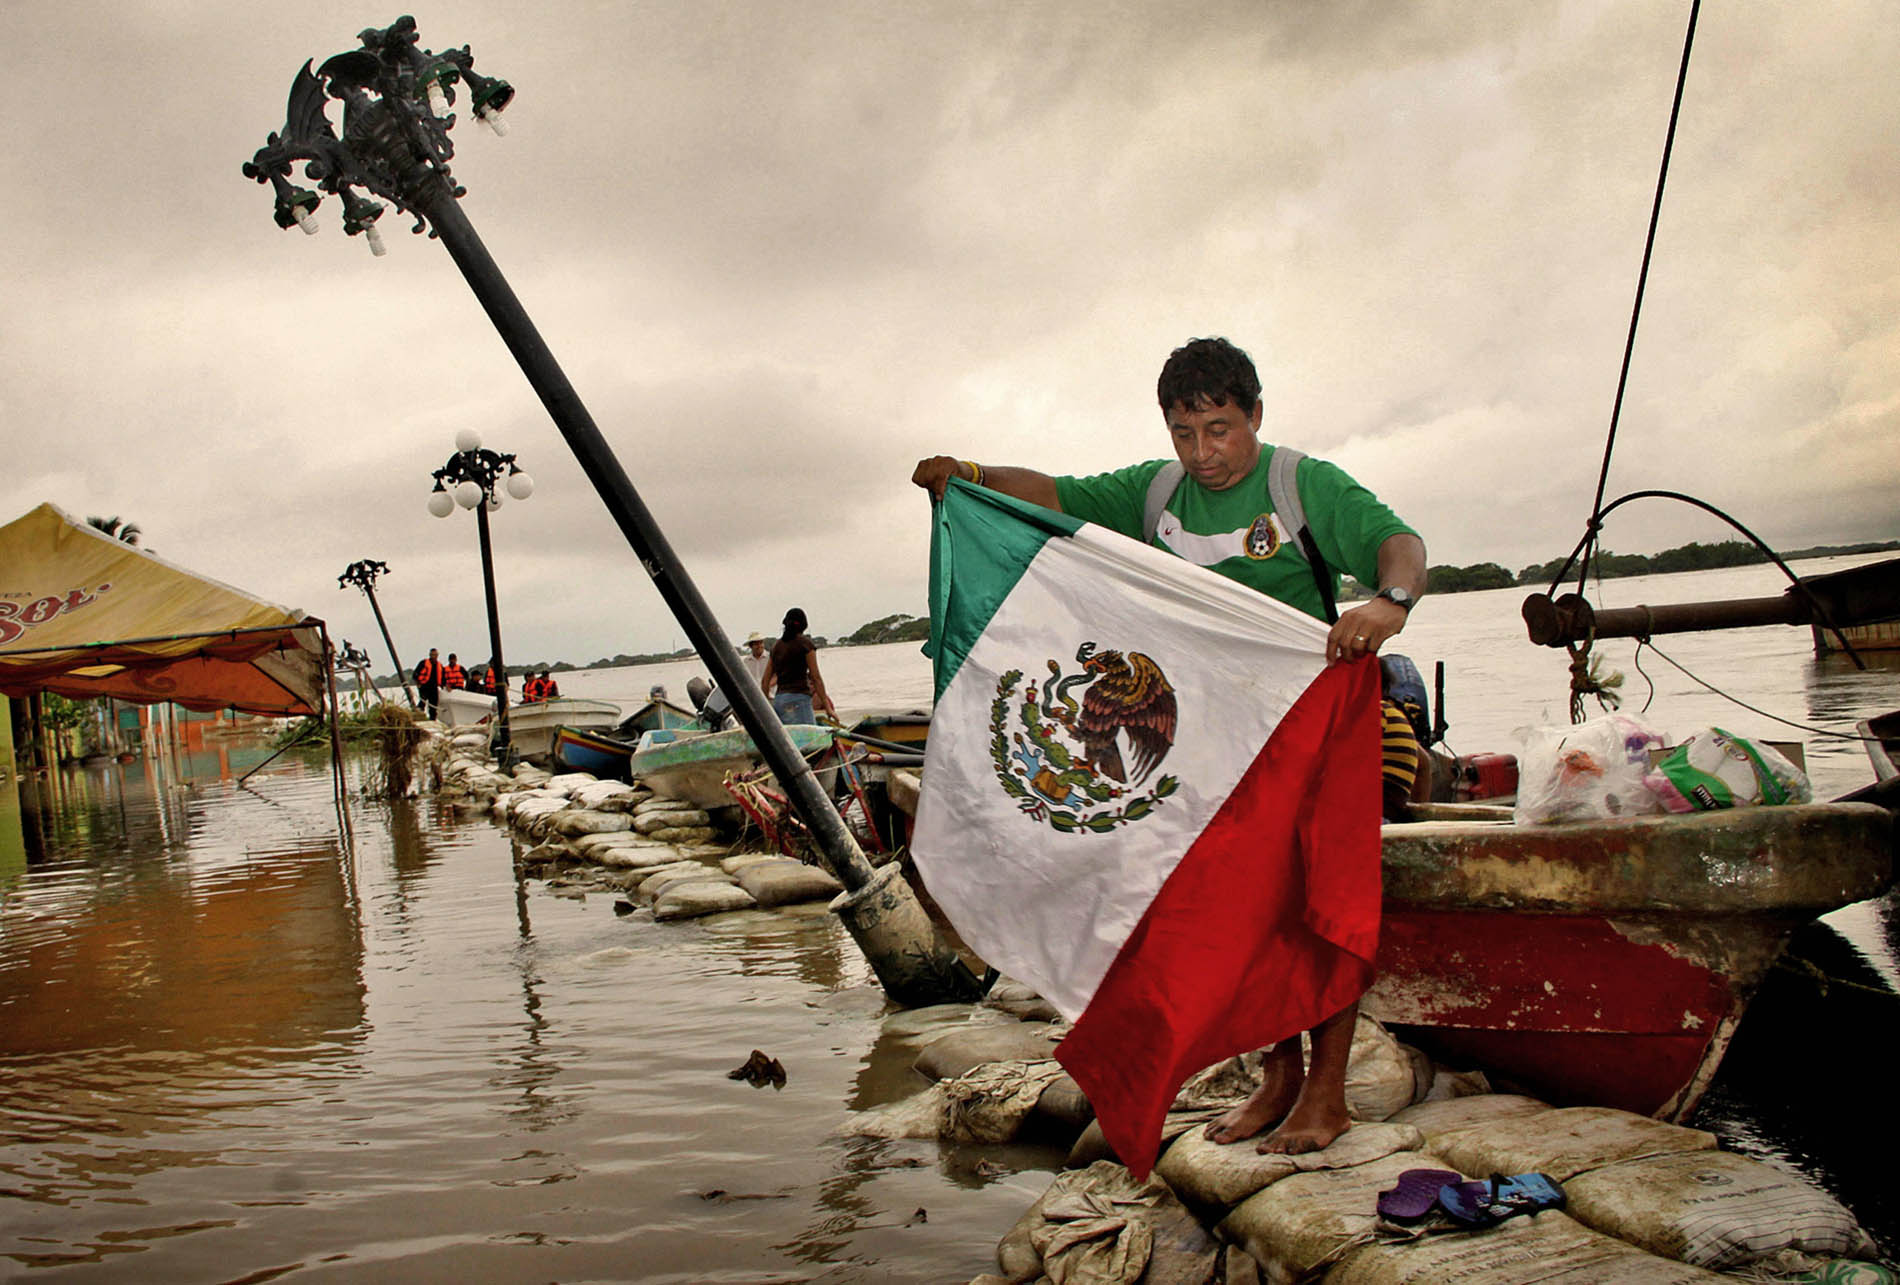  México está preparado ante riesgos por fenómenos naturales